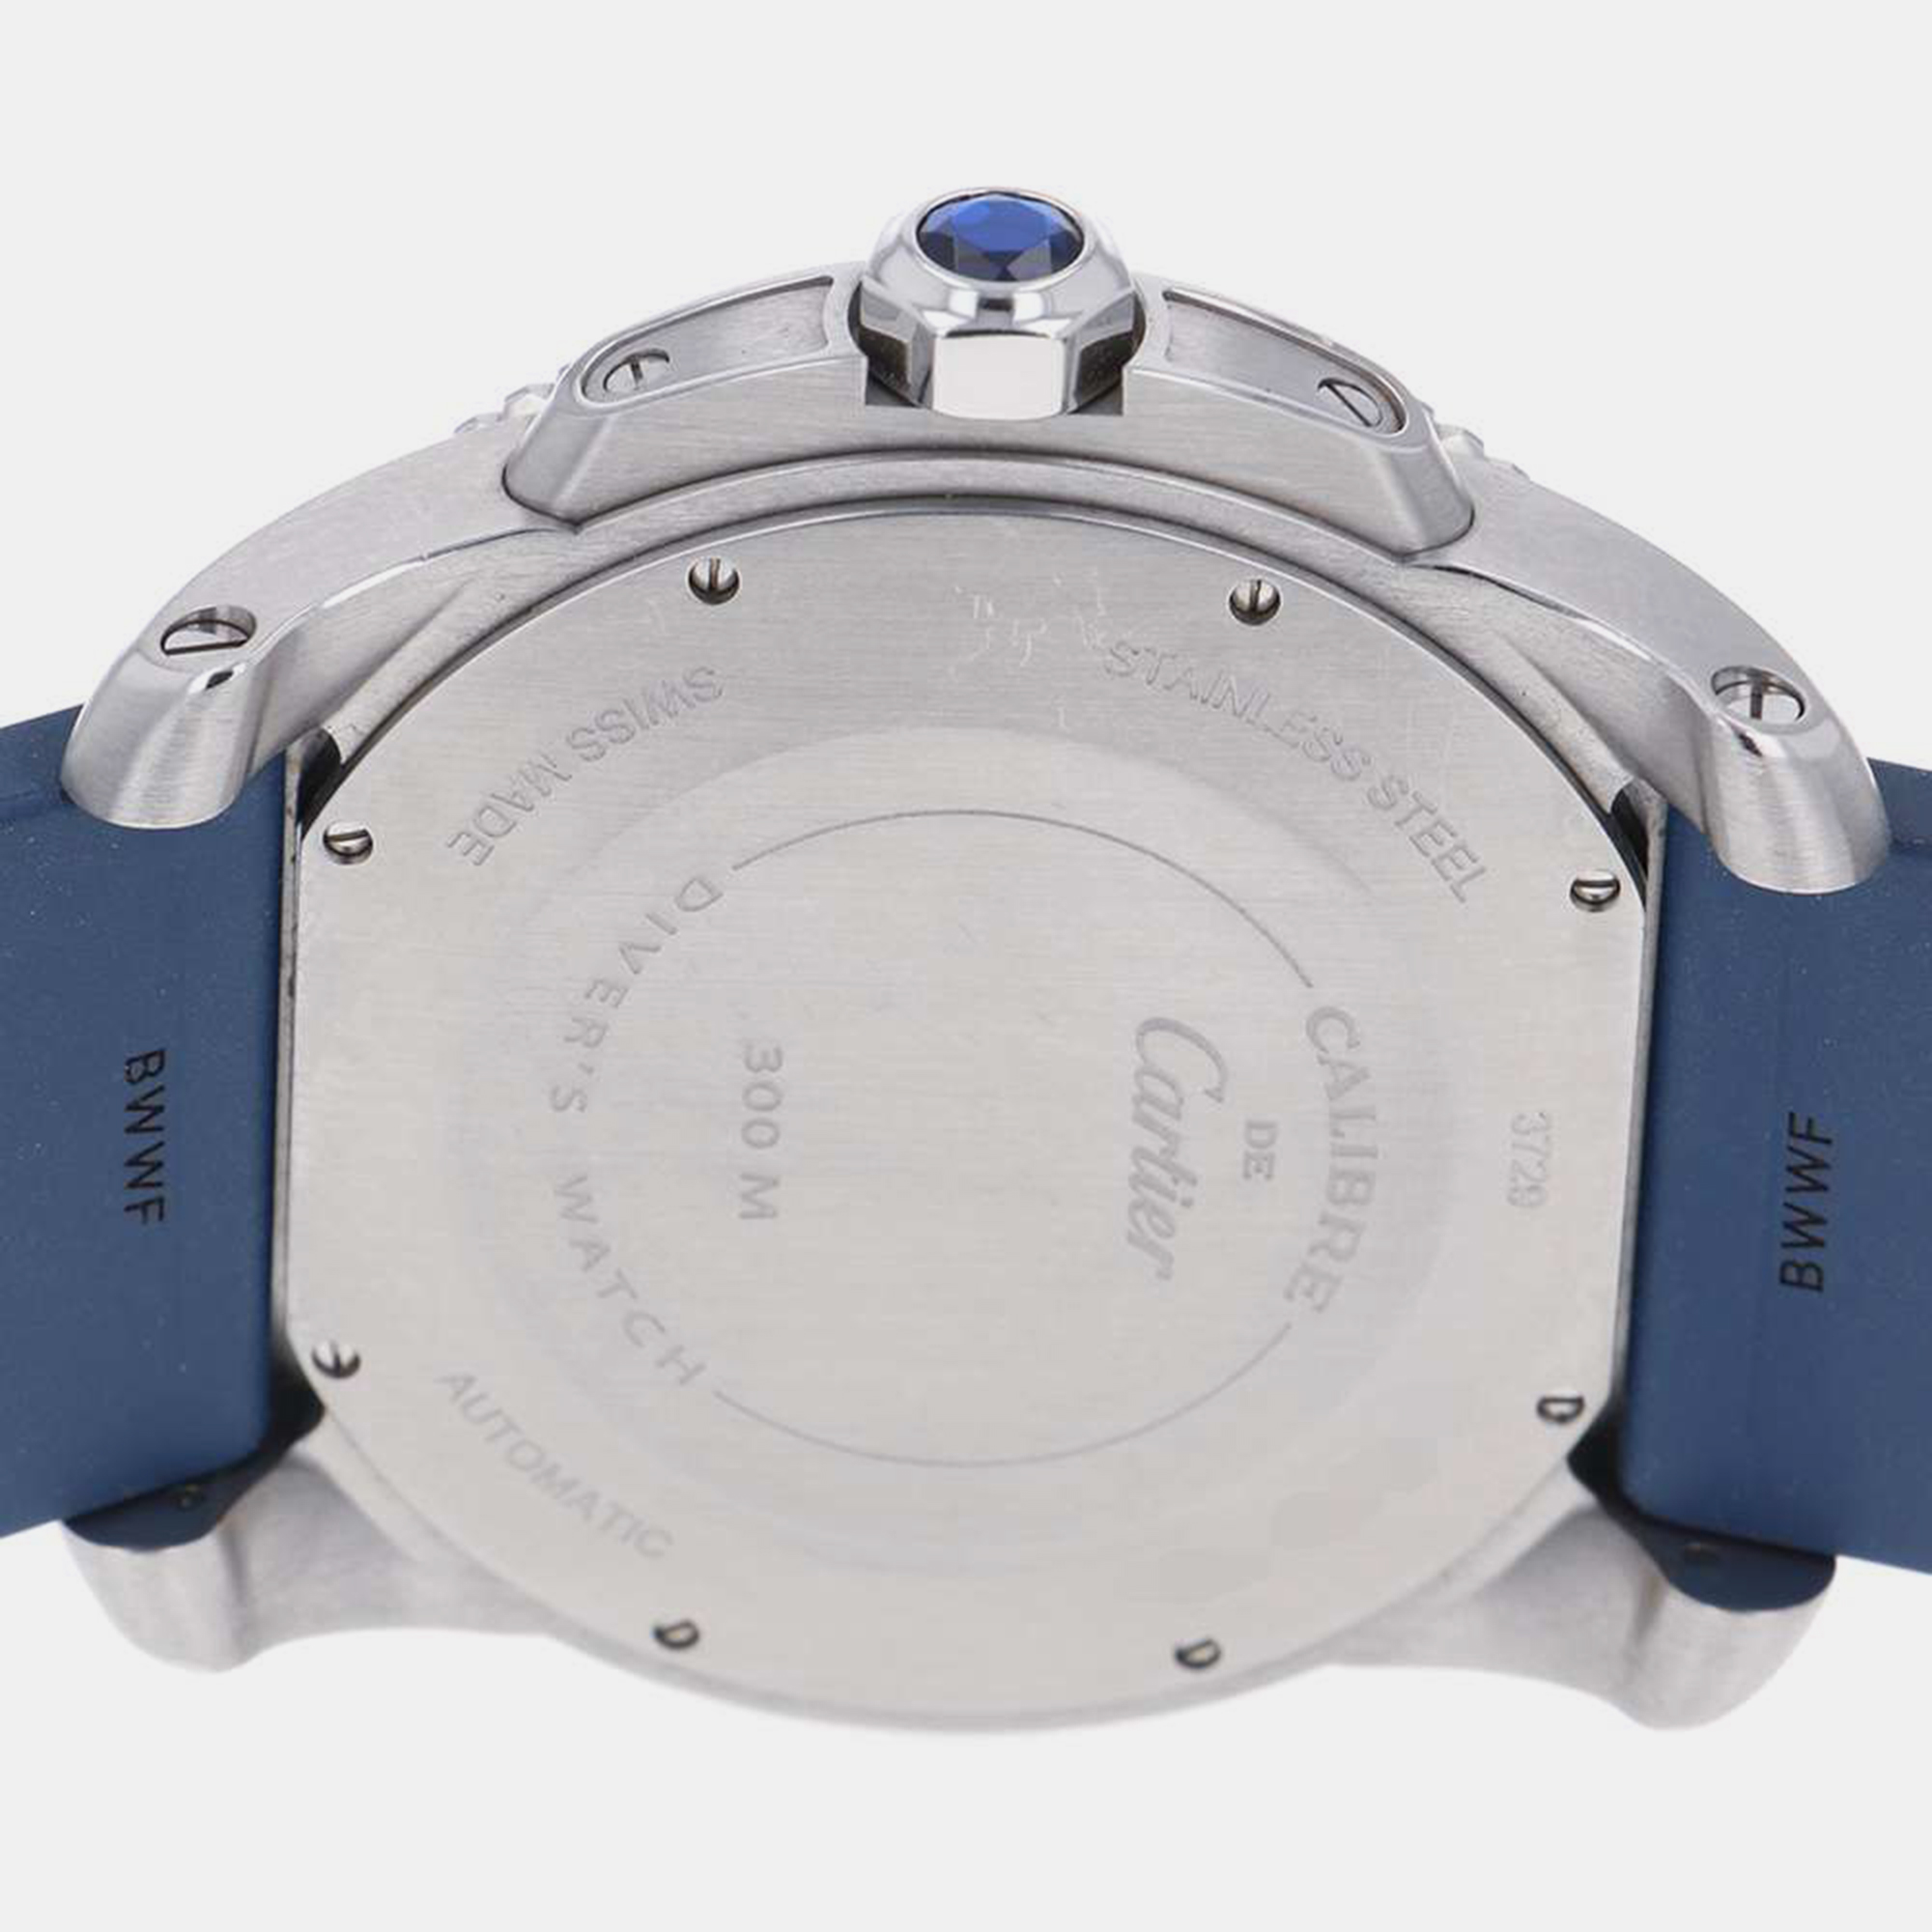 Cartier Blue Stainless Steel Calibre De Cartier WSCA0011 Automatic Men's Wristwatch 42 Mm